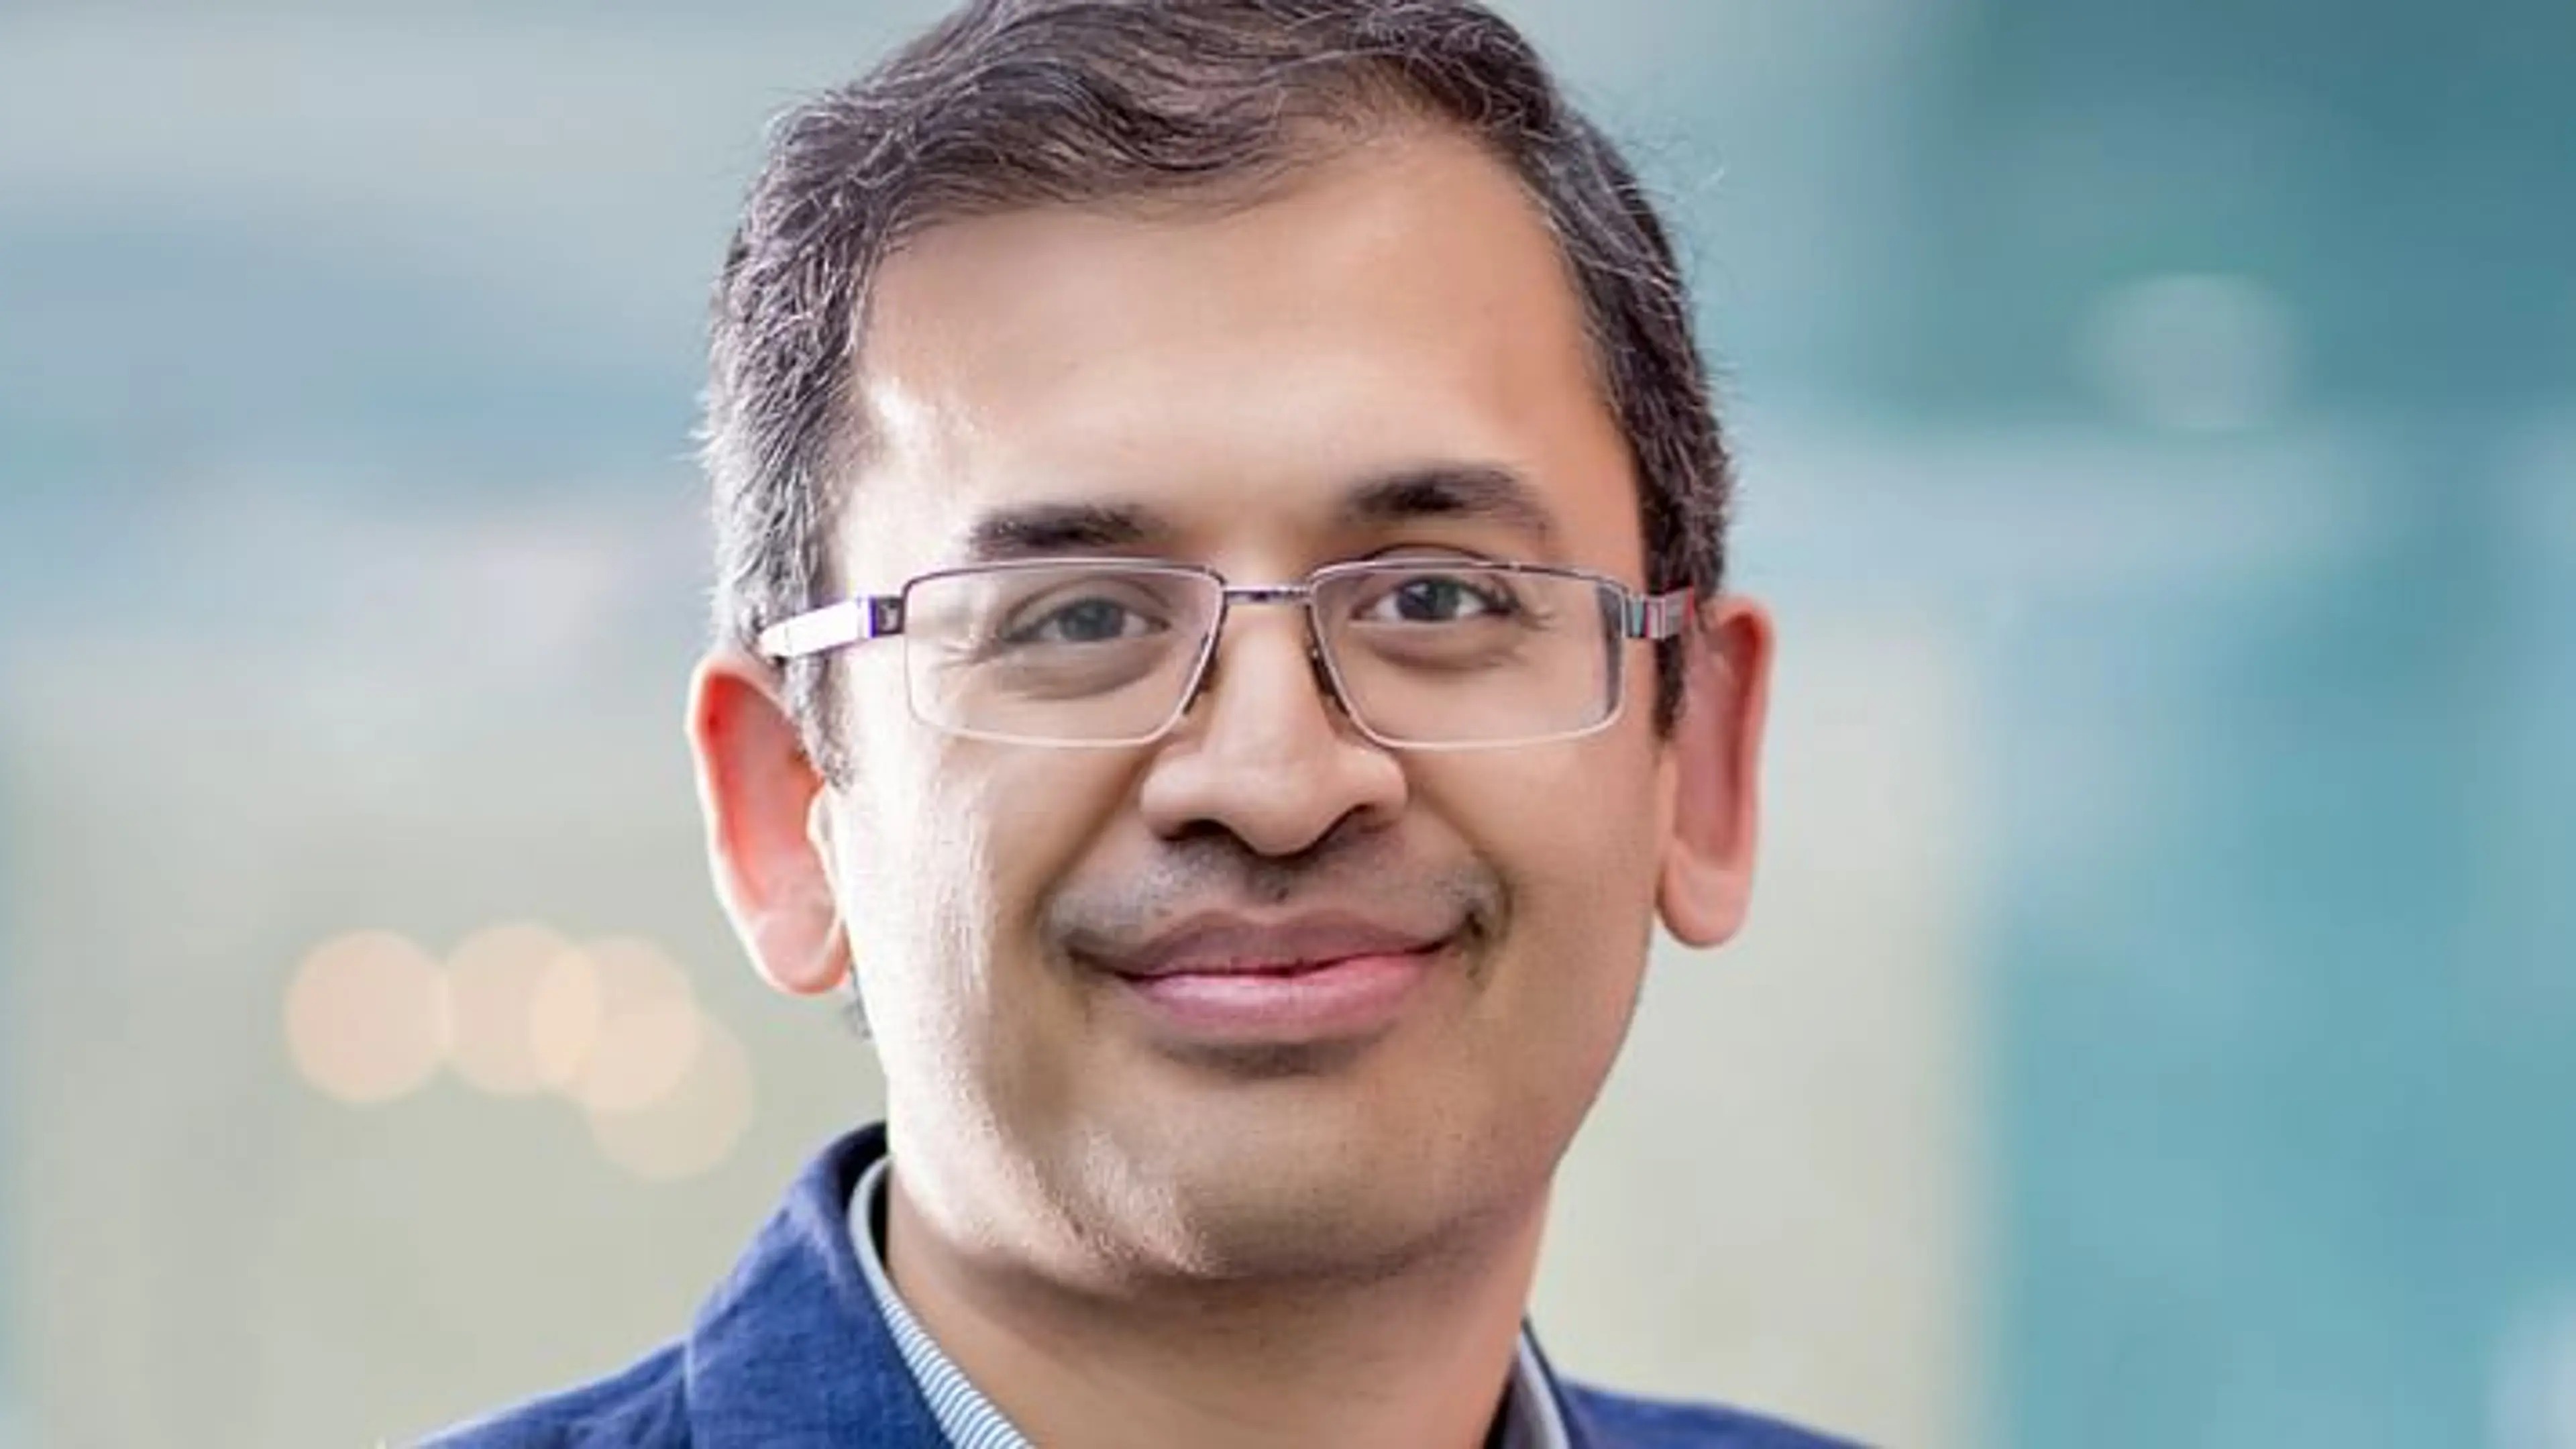 [Funding alert] Ex-Myntra CEO Ananth Narayanan's new venture Mensa Brands raises $50M in Series A round